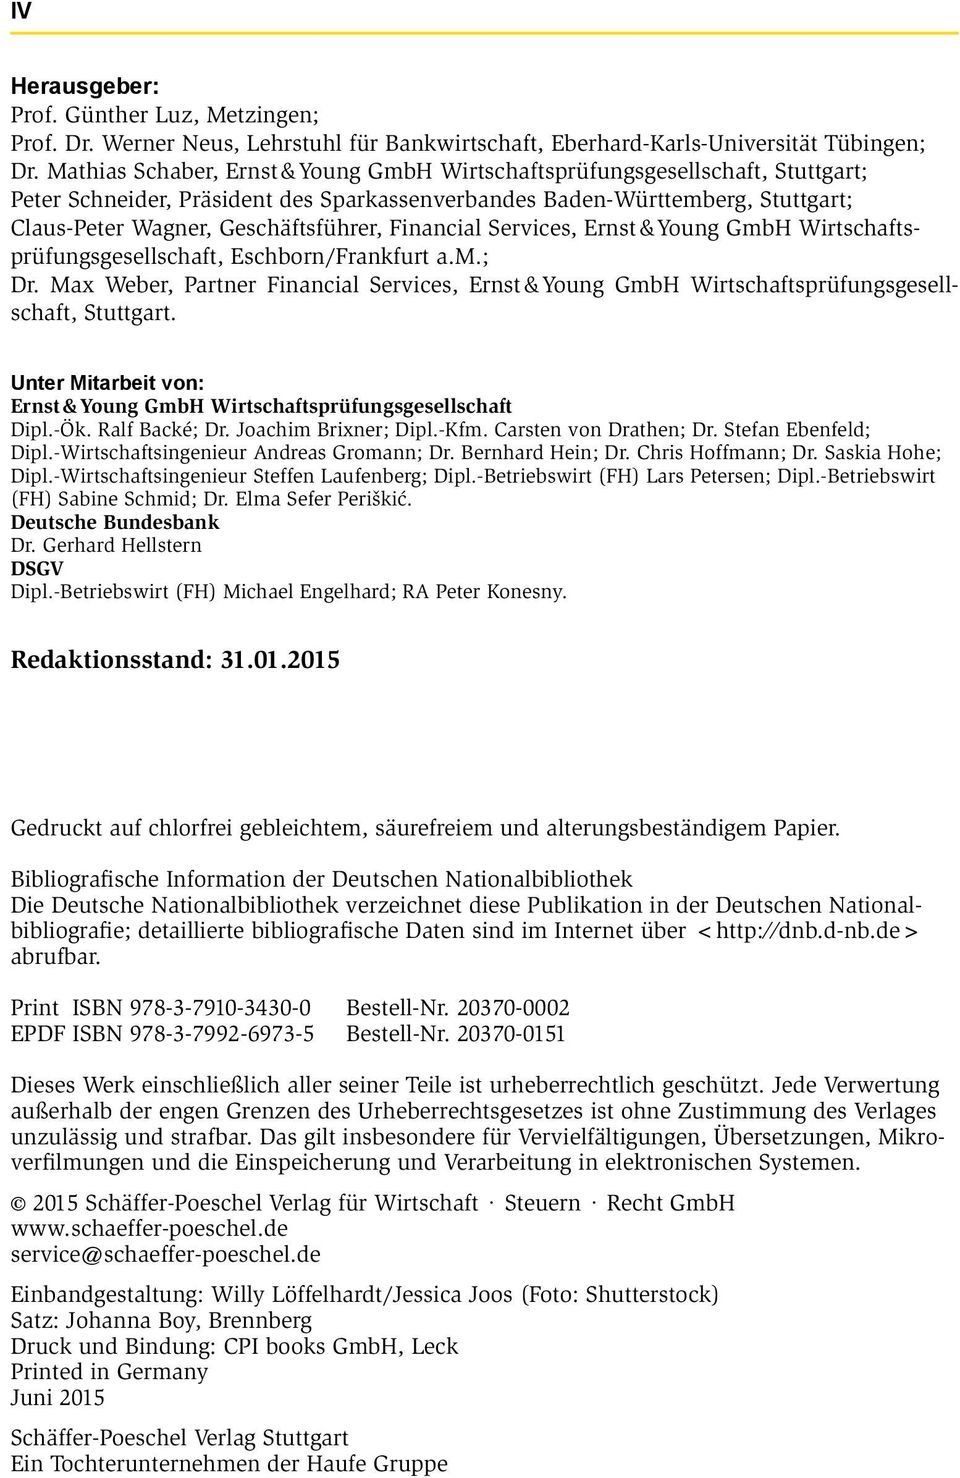 Financial Services, Ernst & Young GmbH Wirtschaftsprüfungsgesellschaft, Eschborn/Frankfurt a.m.; Dr.